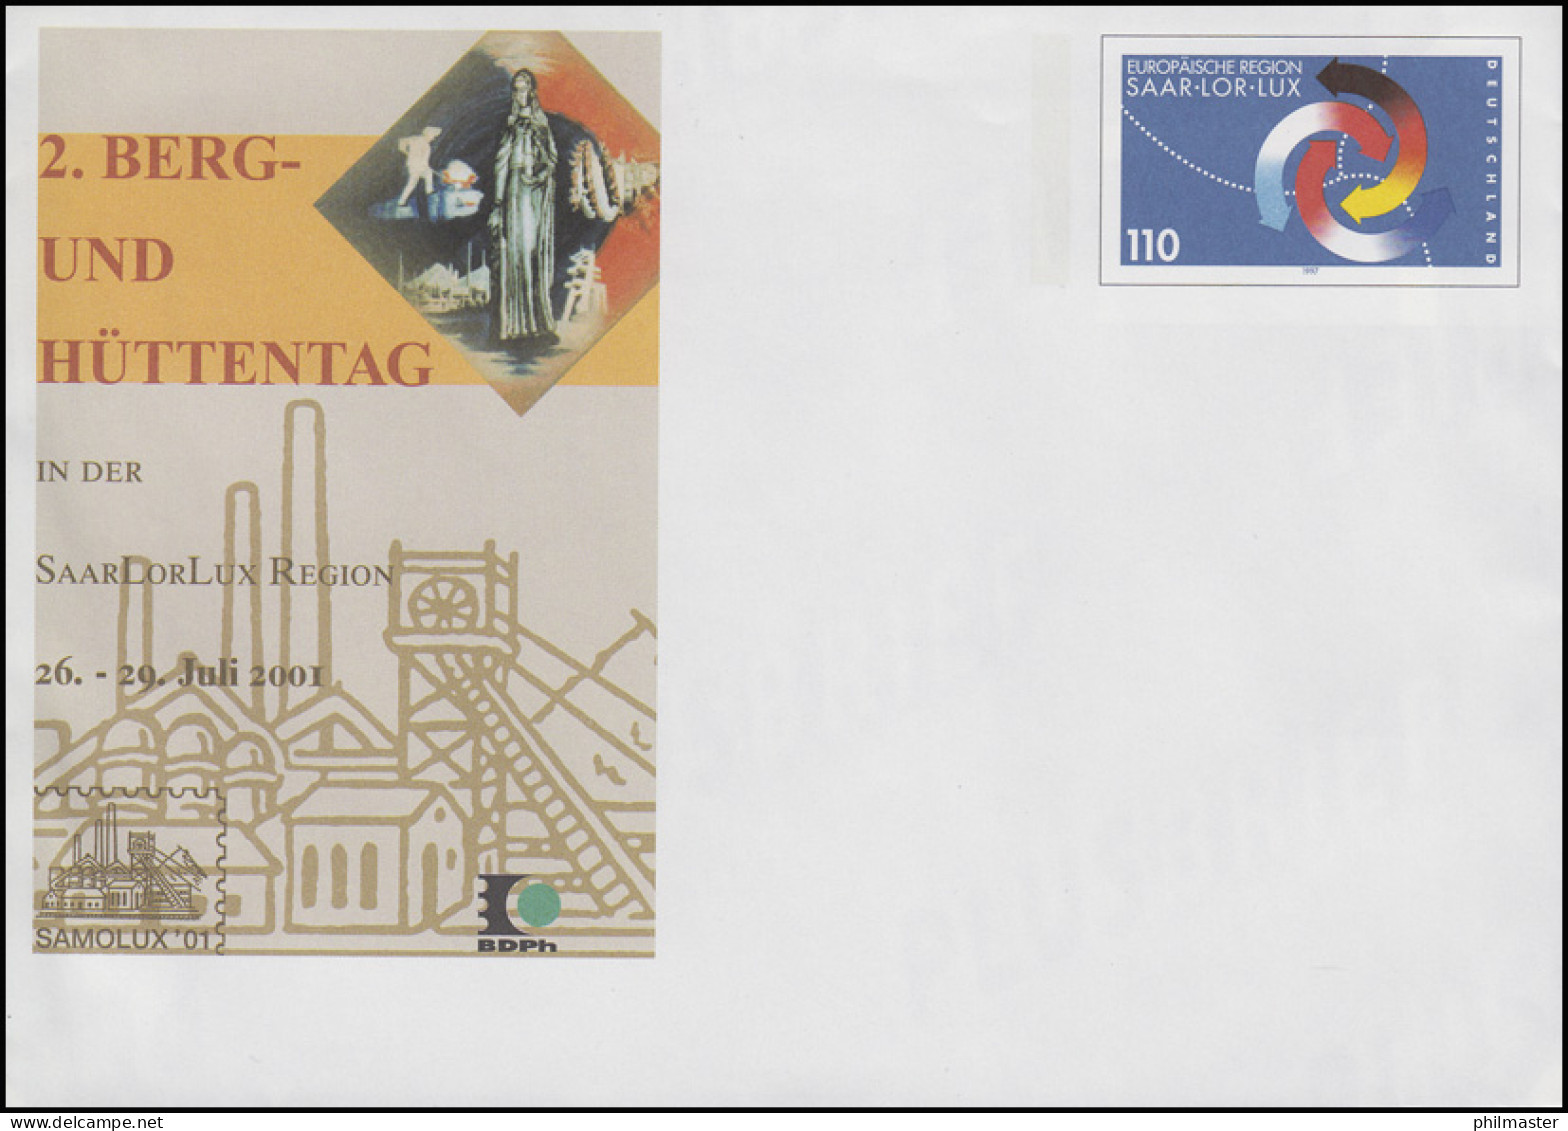 USo 29 SAMOLUX 2001 Berg- Und Hüttentag, Postfrisch - Enveloppes - Neuves